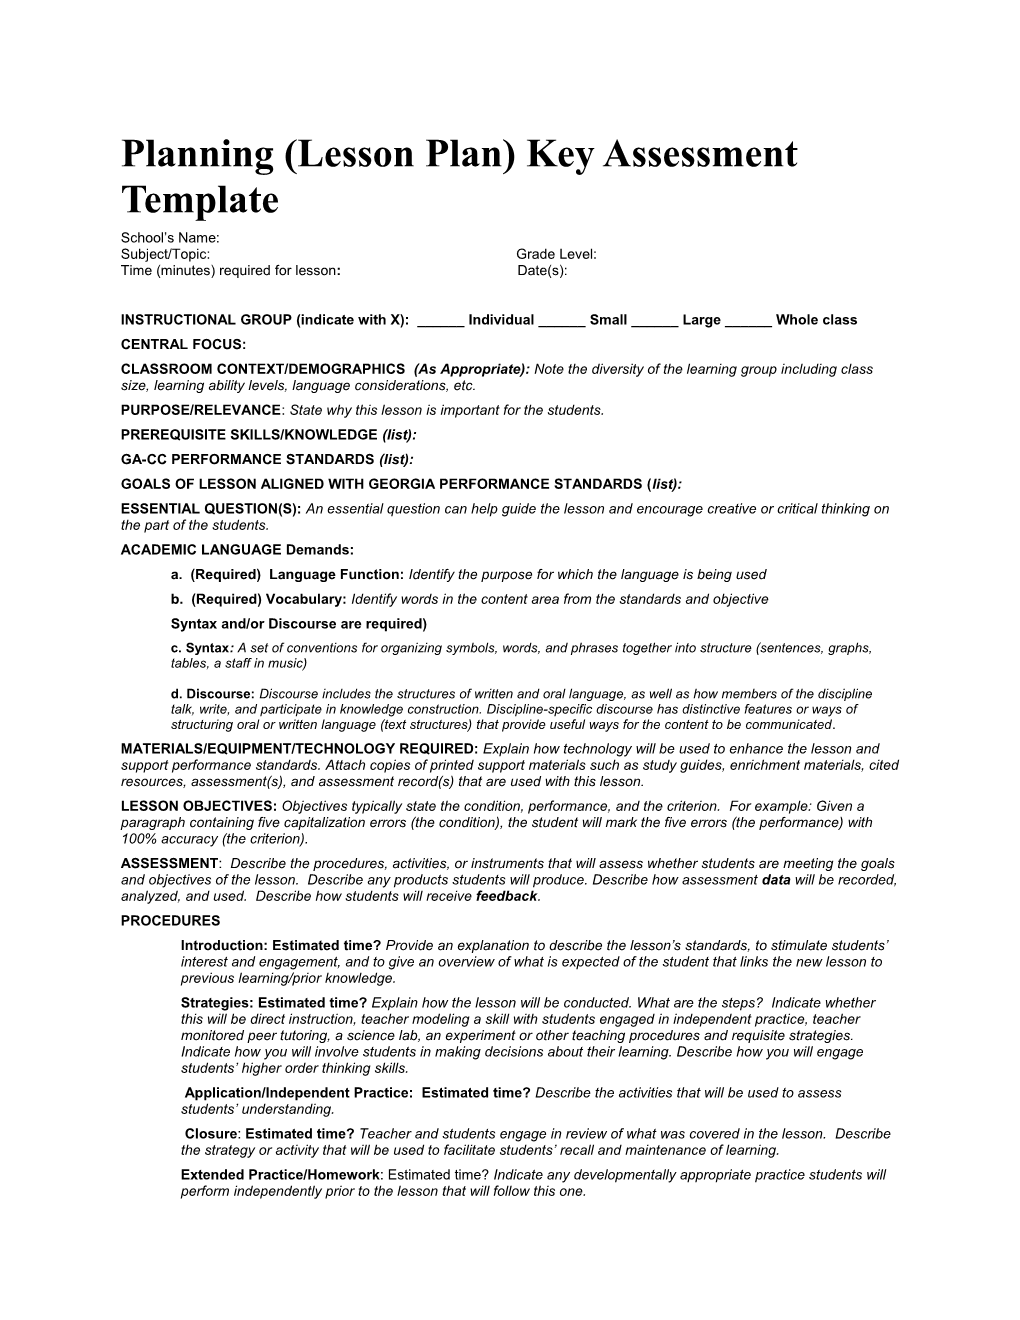 Planning (Lesson Plan) Key Assessment Template